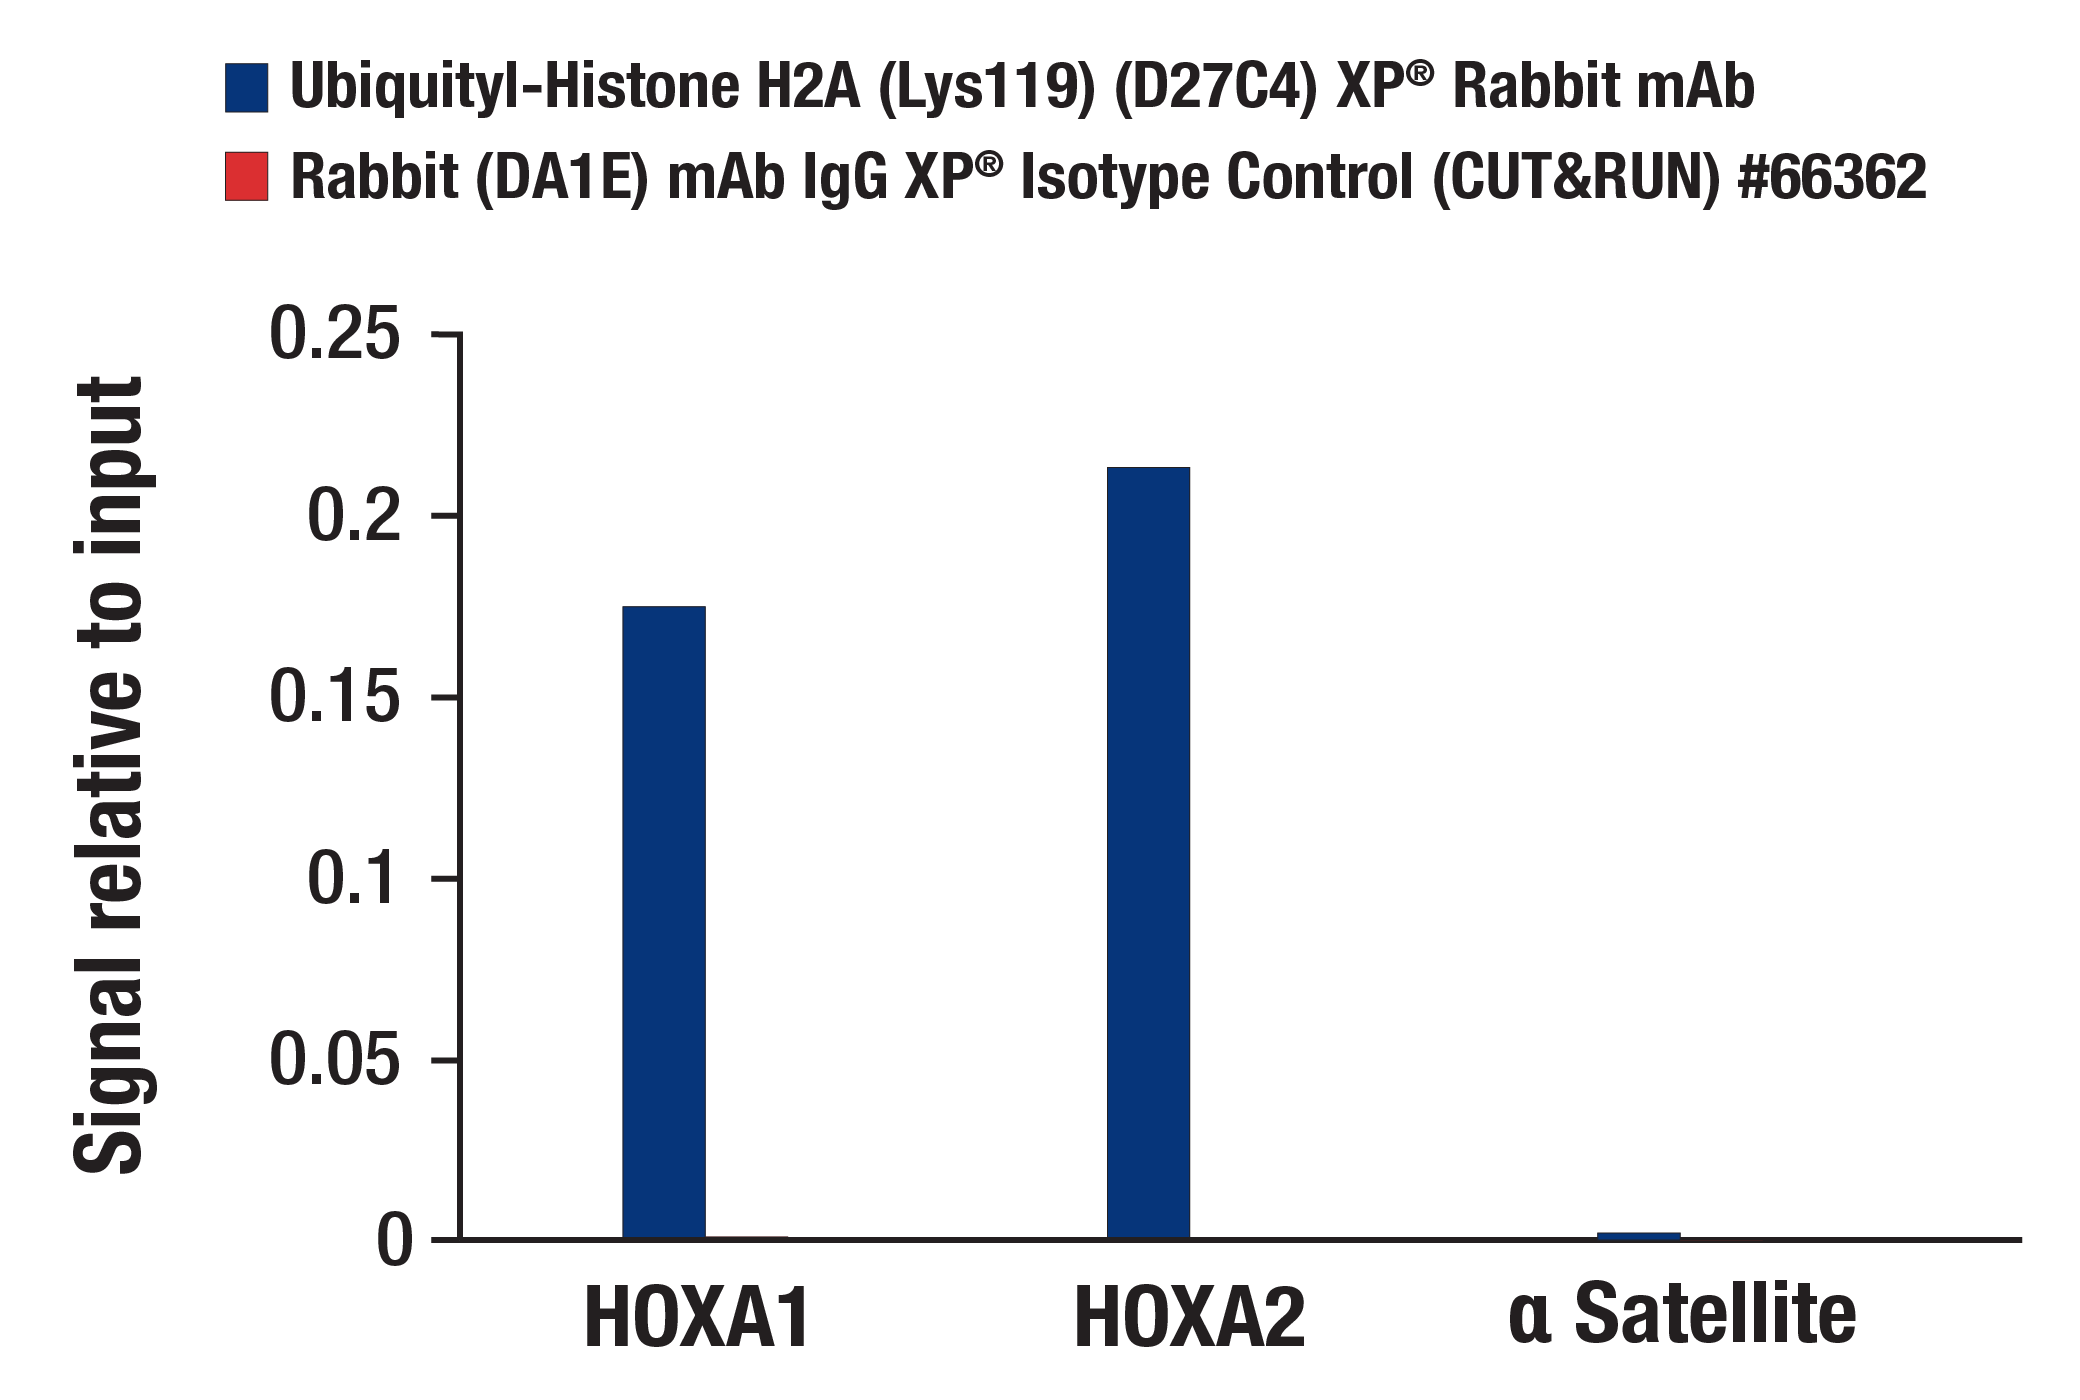 CUT and RUN Image 3: Ubiquityl-Histone H2A (Lys119) (D27C4) XP® Rabbit mAb